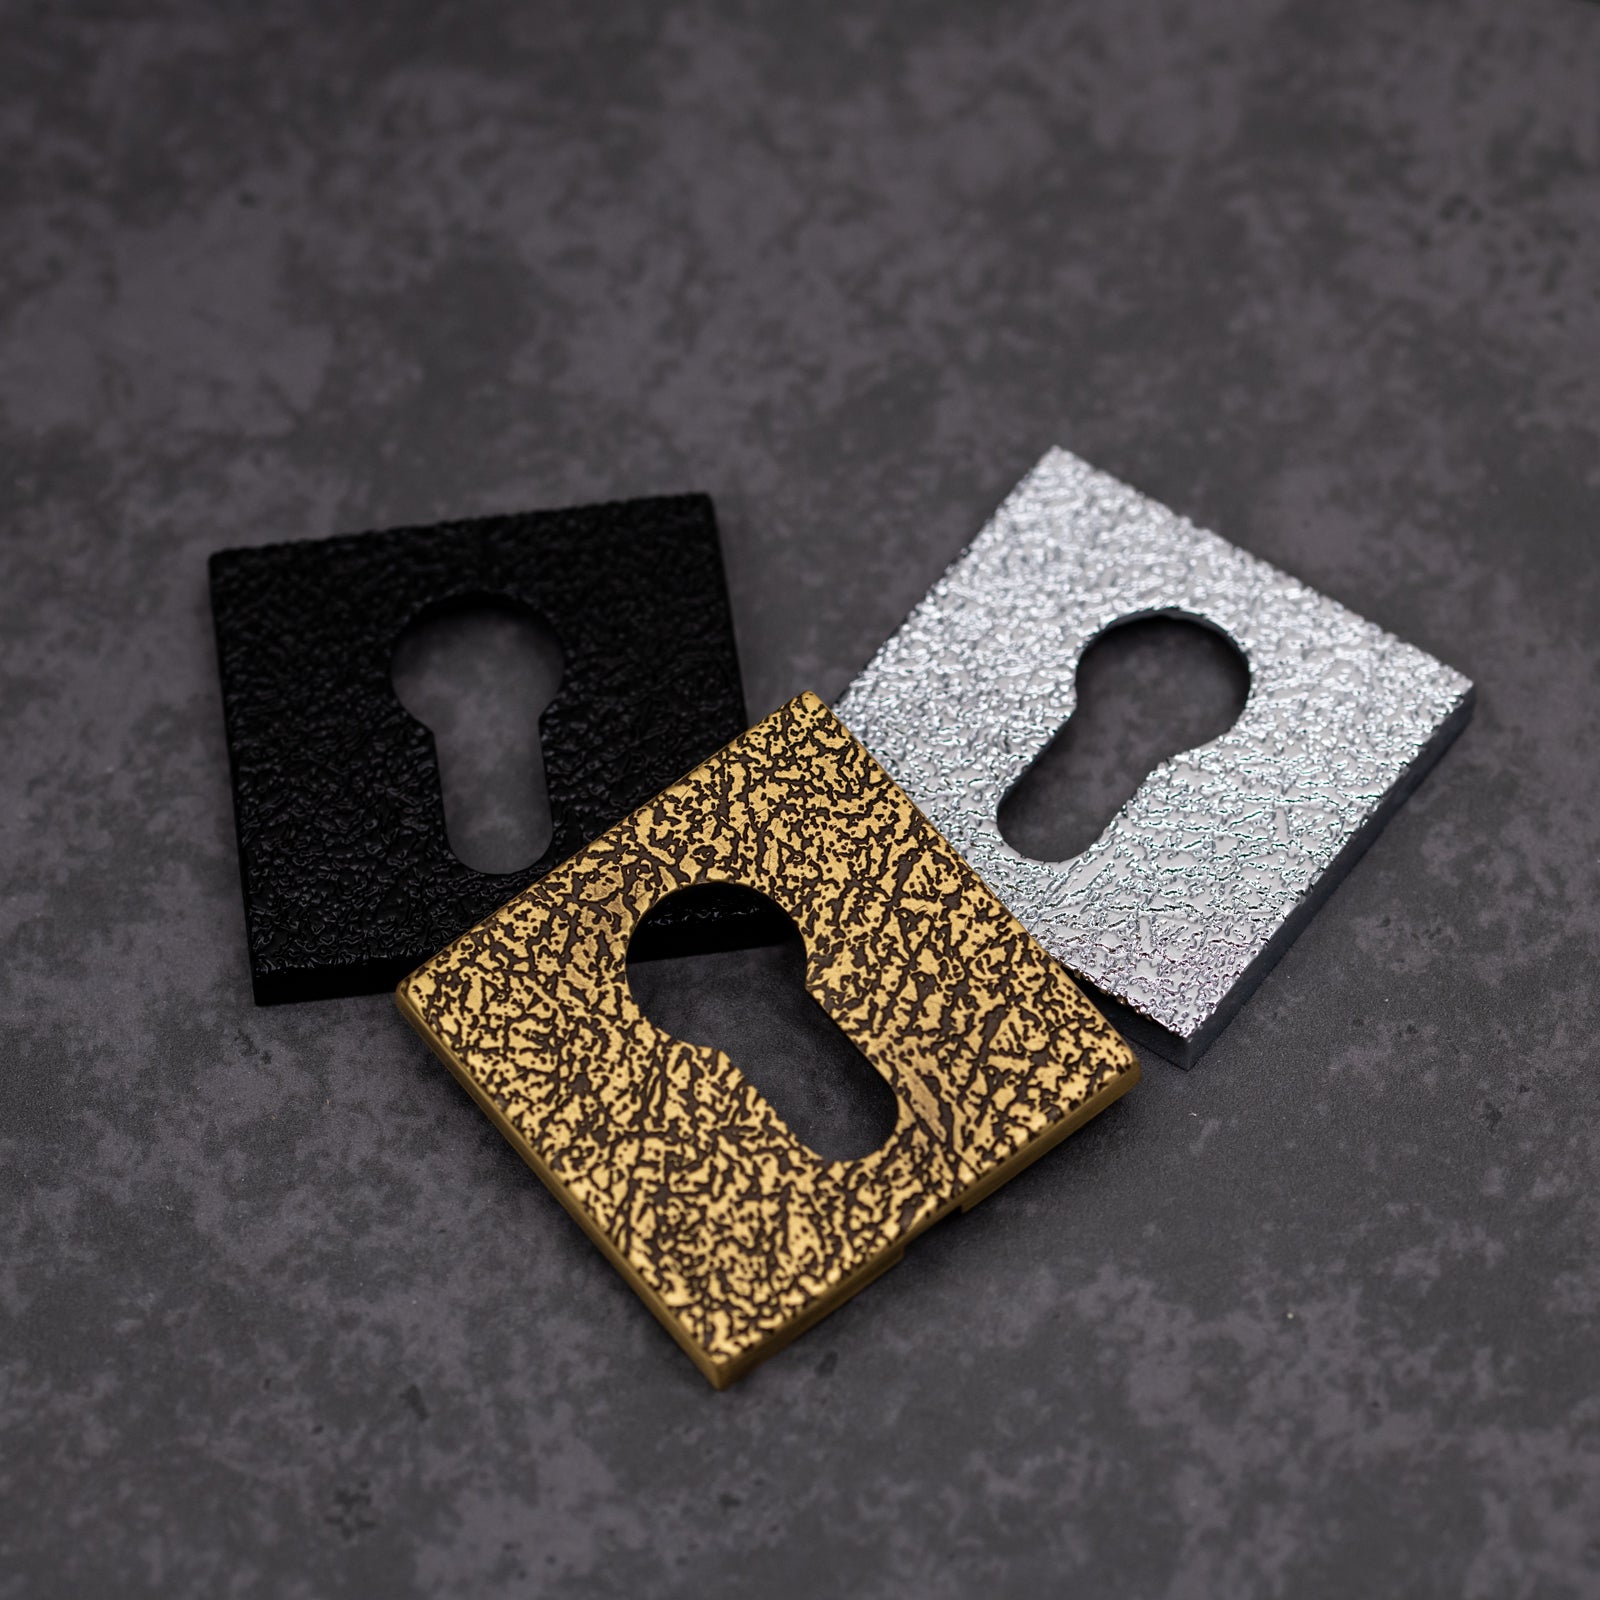 Tupai Euro Profile escutcheons with organic leather effect on Square Rose Lifestyle Image SHOW